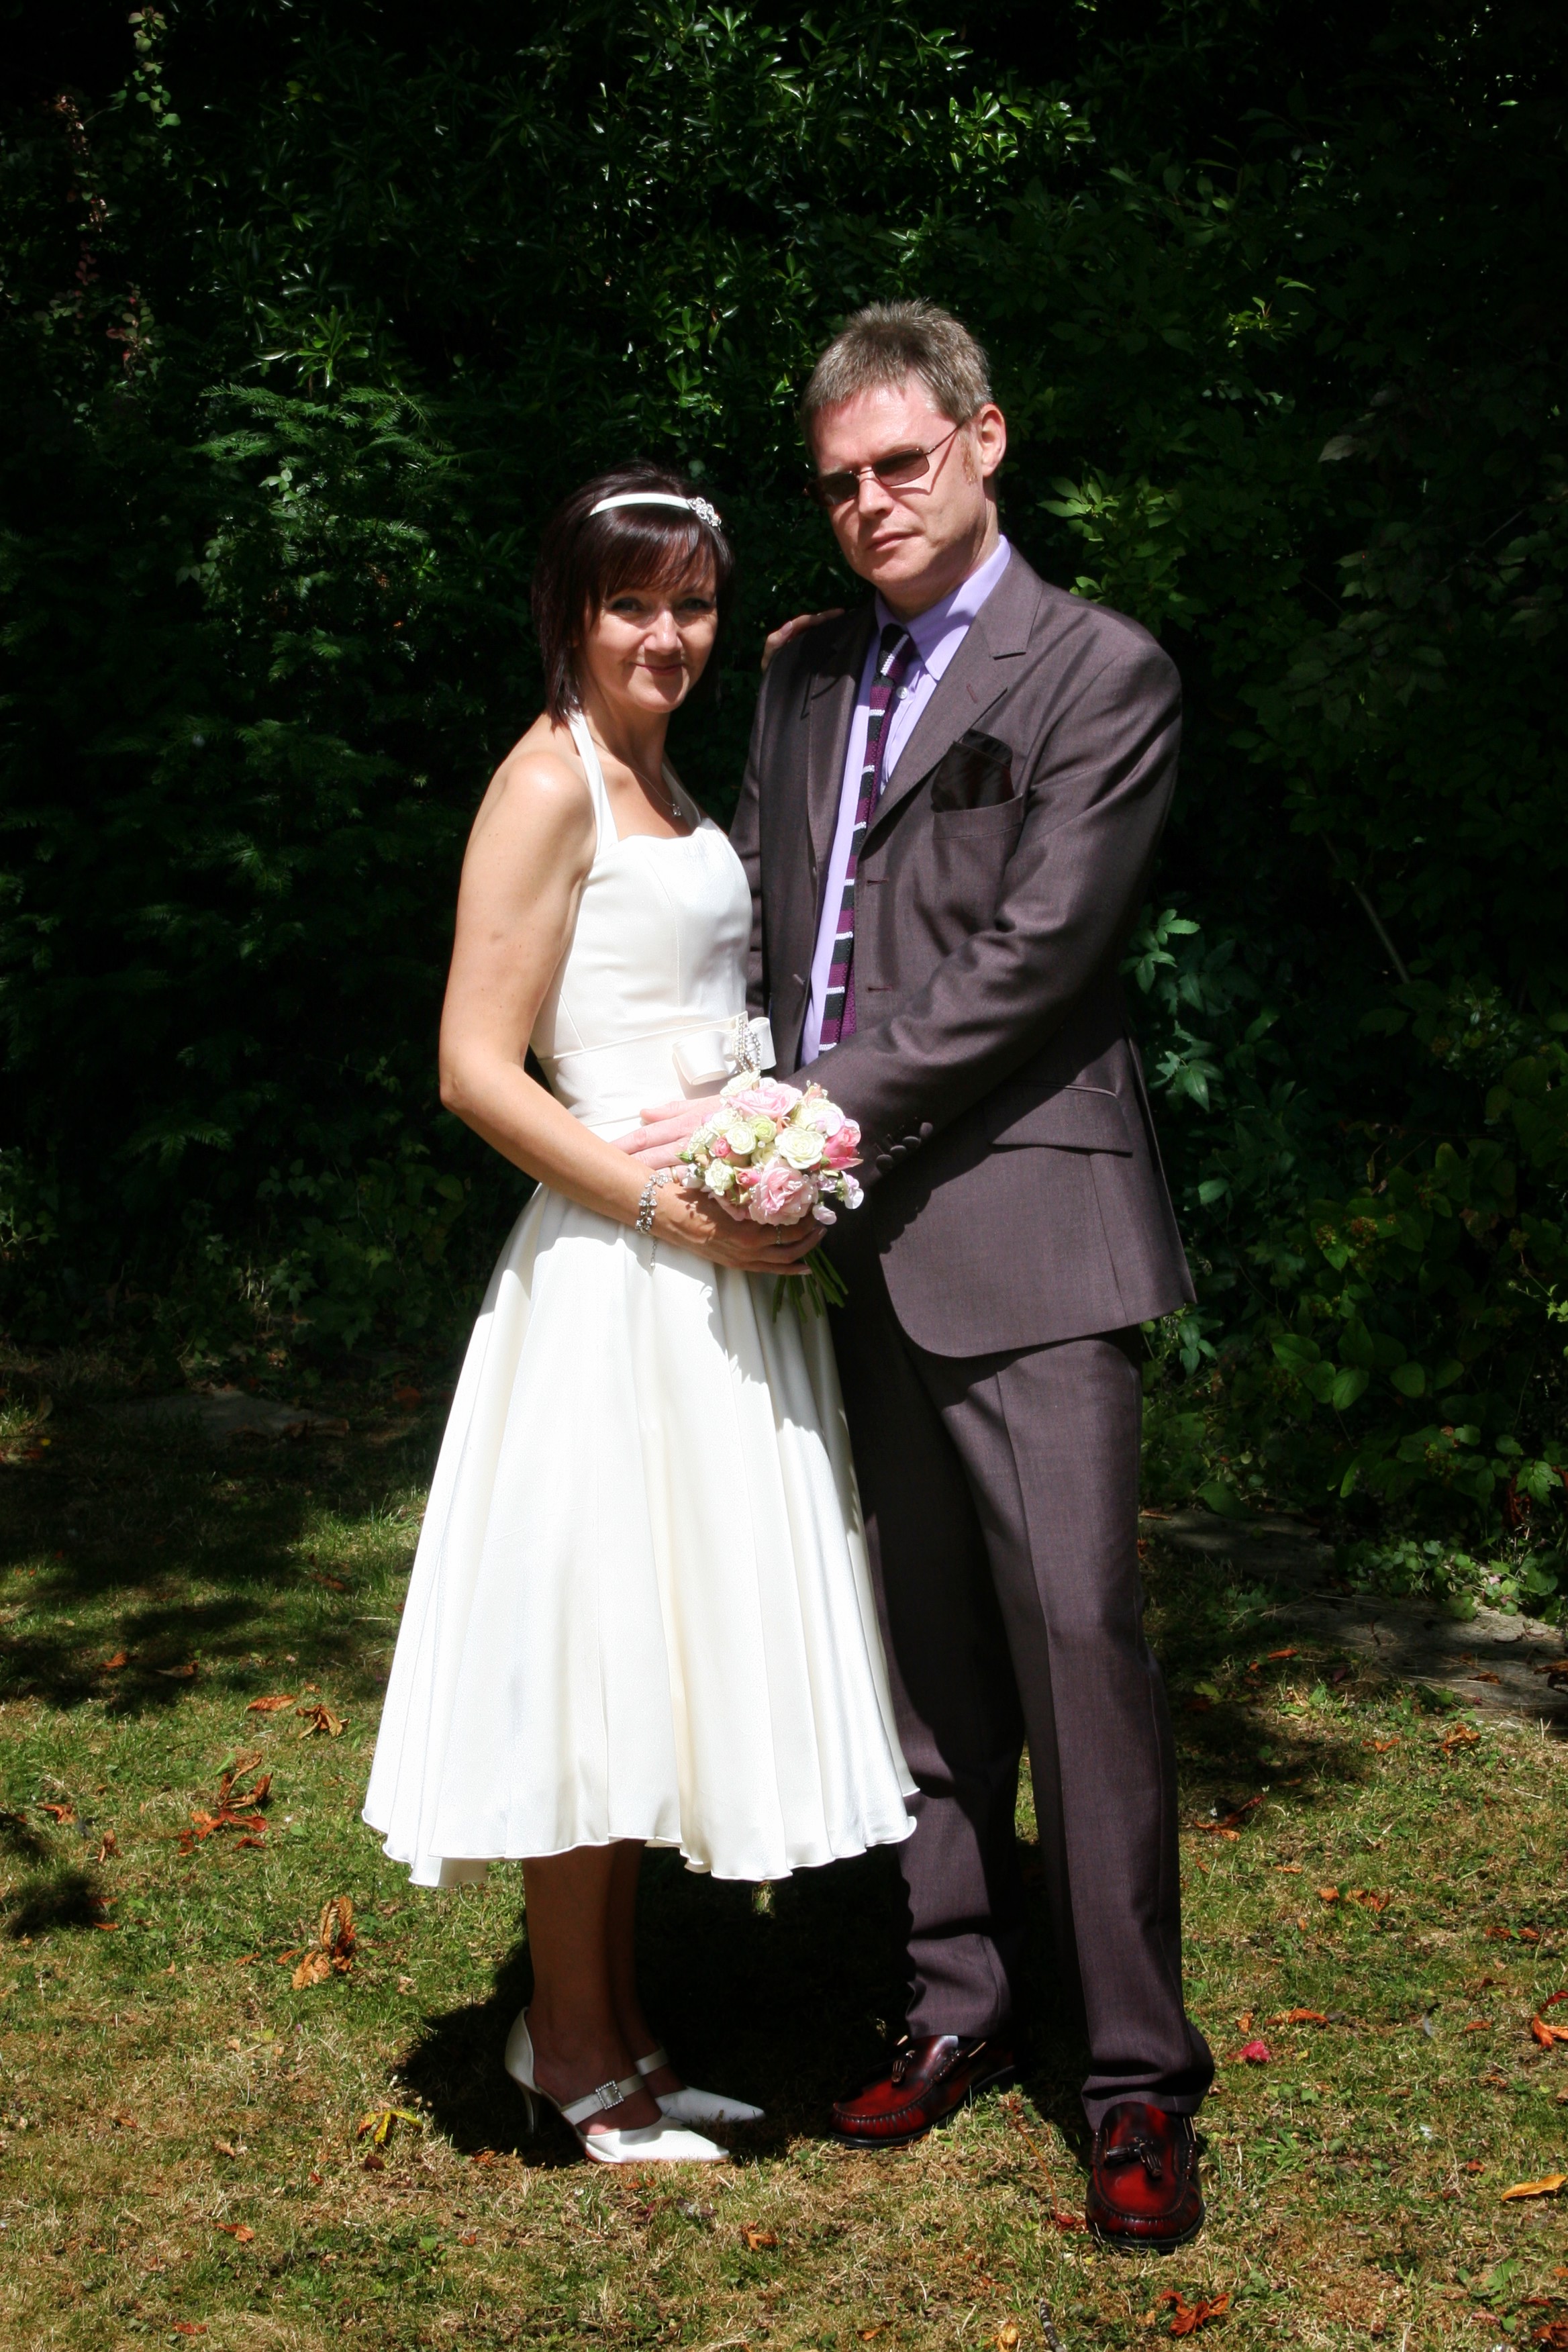 Tanya & Andy's wedding vow renewals 2013